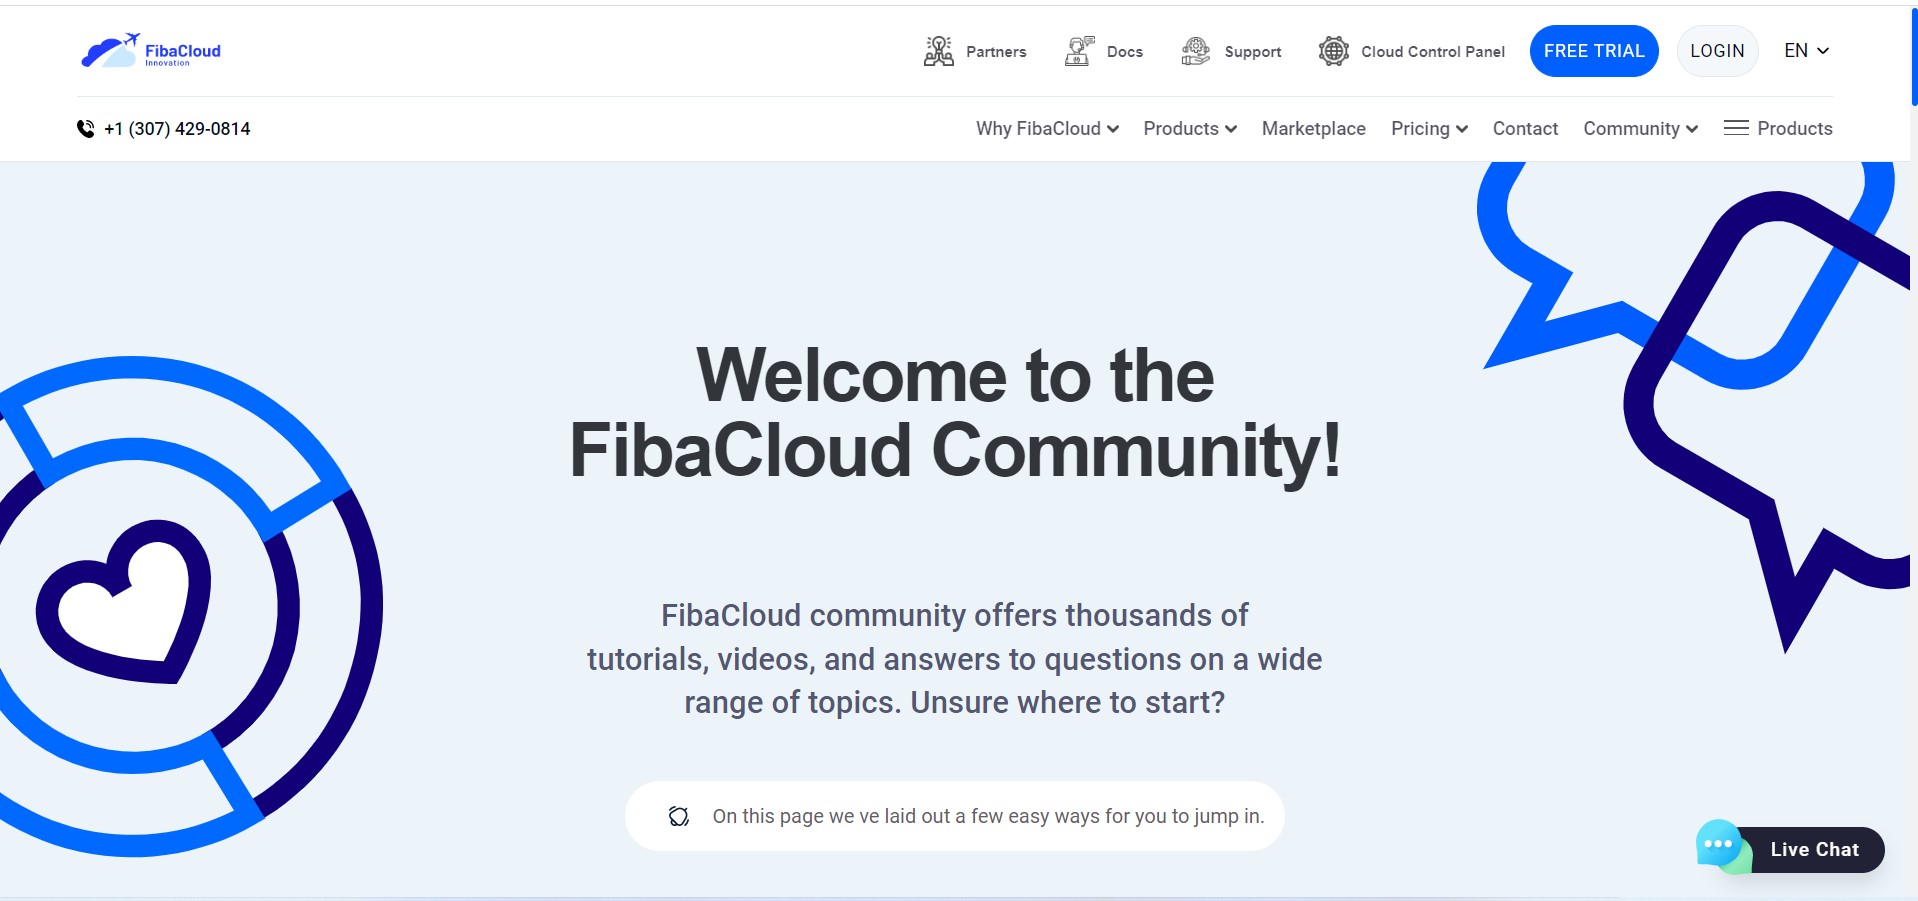 FibaCloud Community